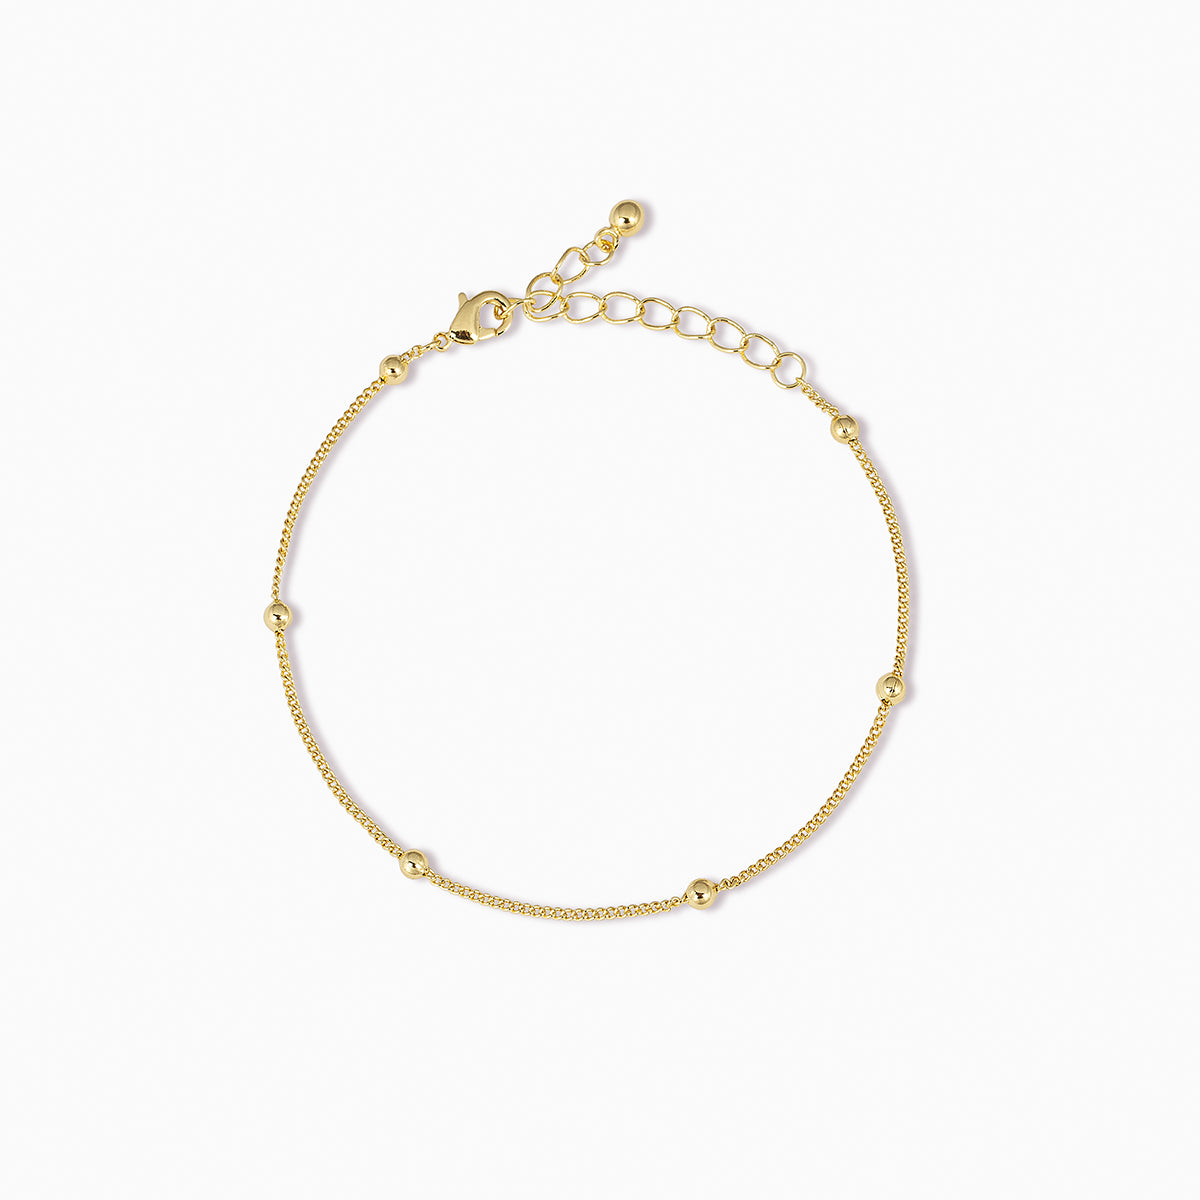 Wide link chain Gold Bracelet -